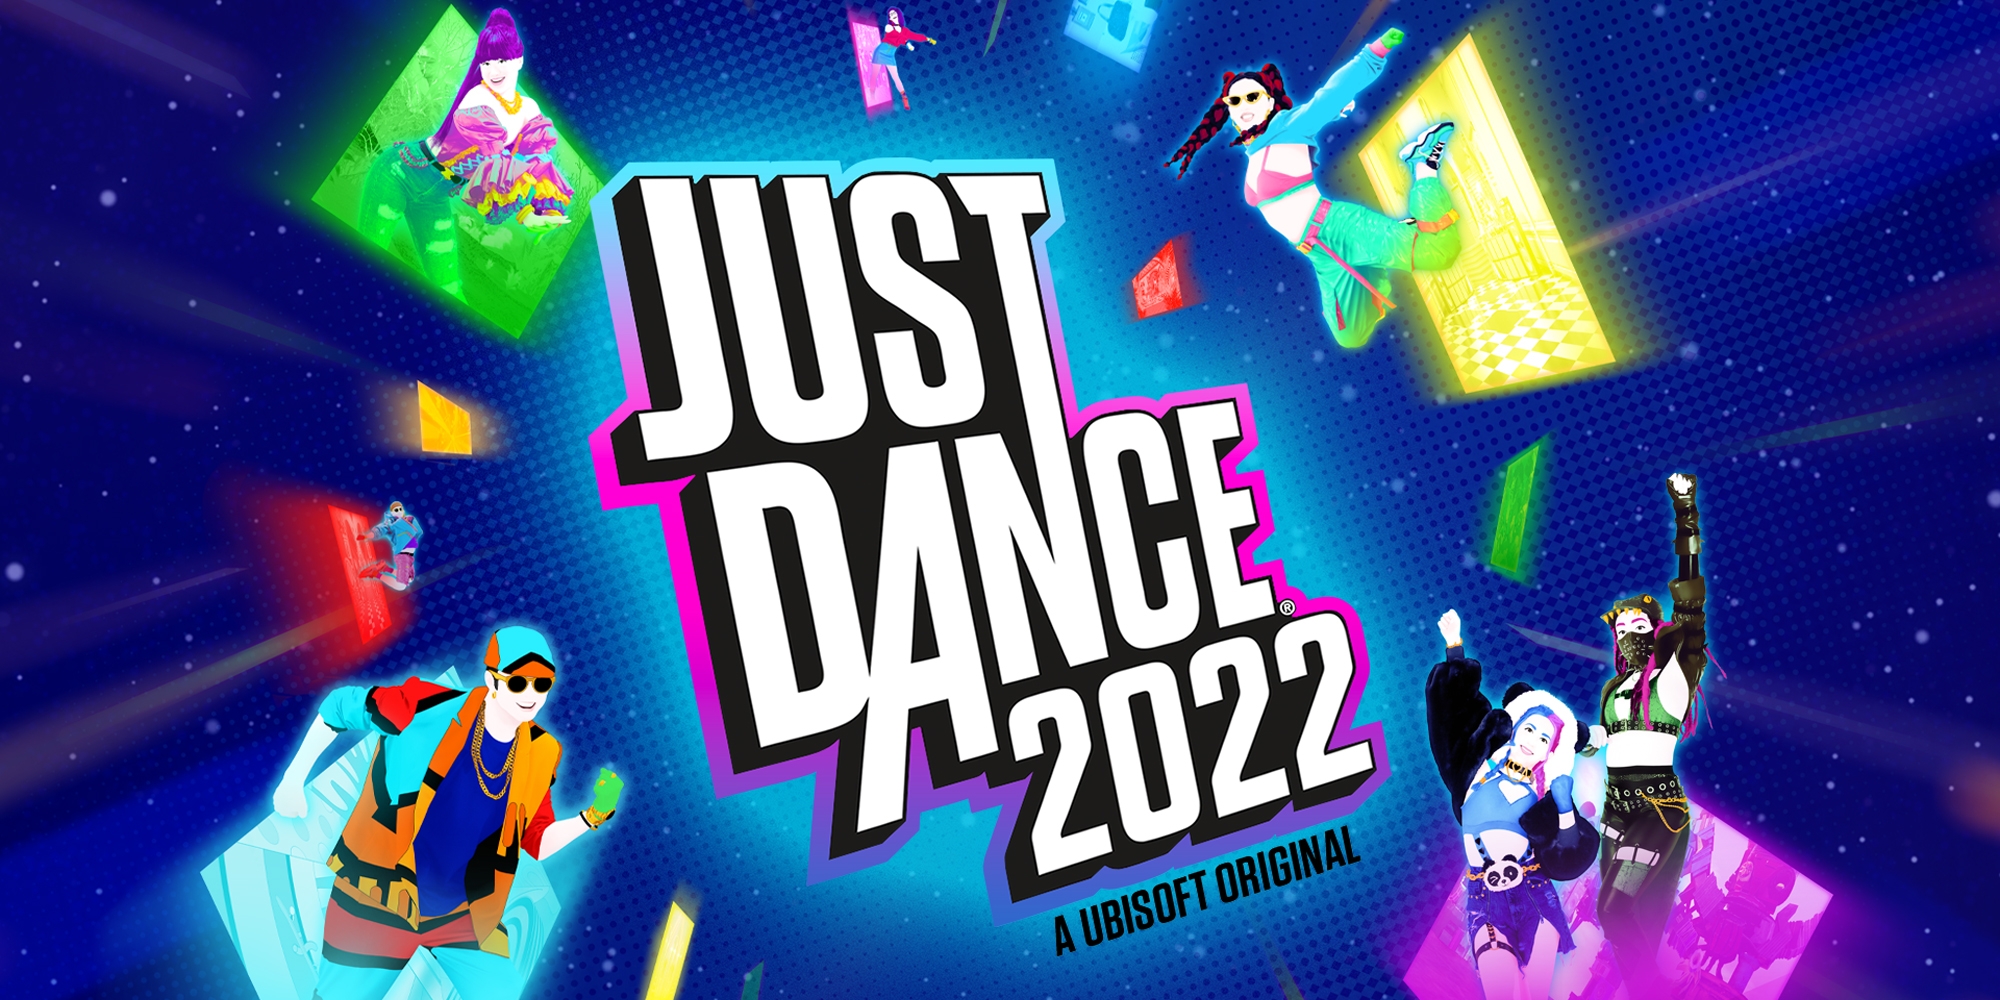 Just dance 2022 xbox series x kop uns